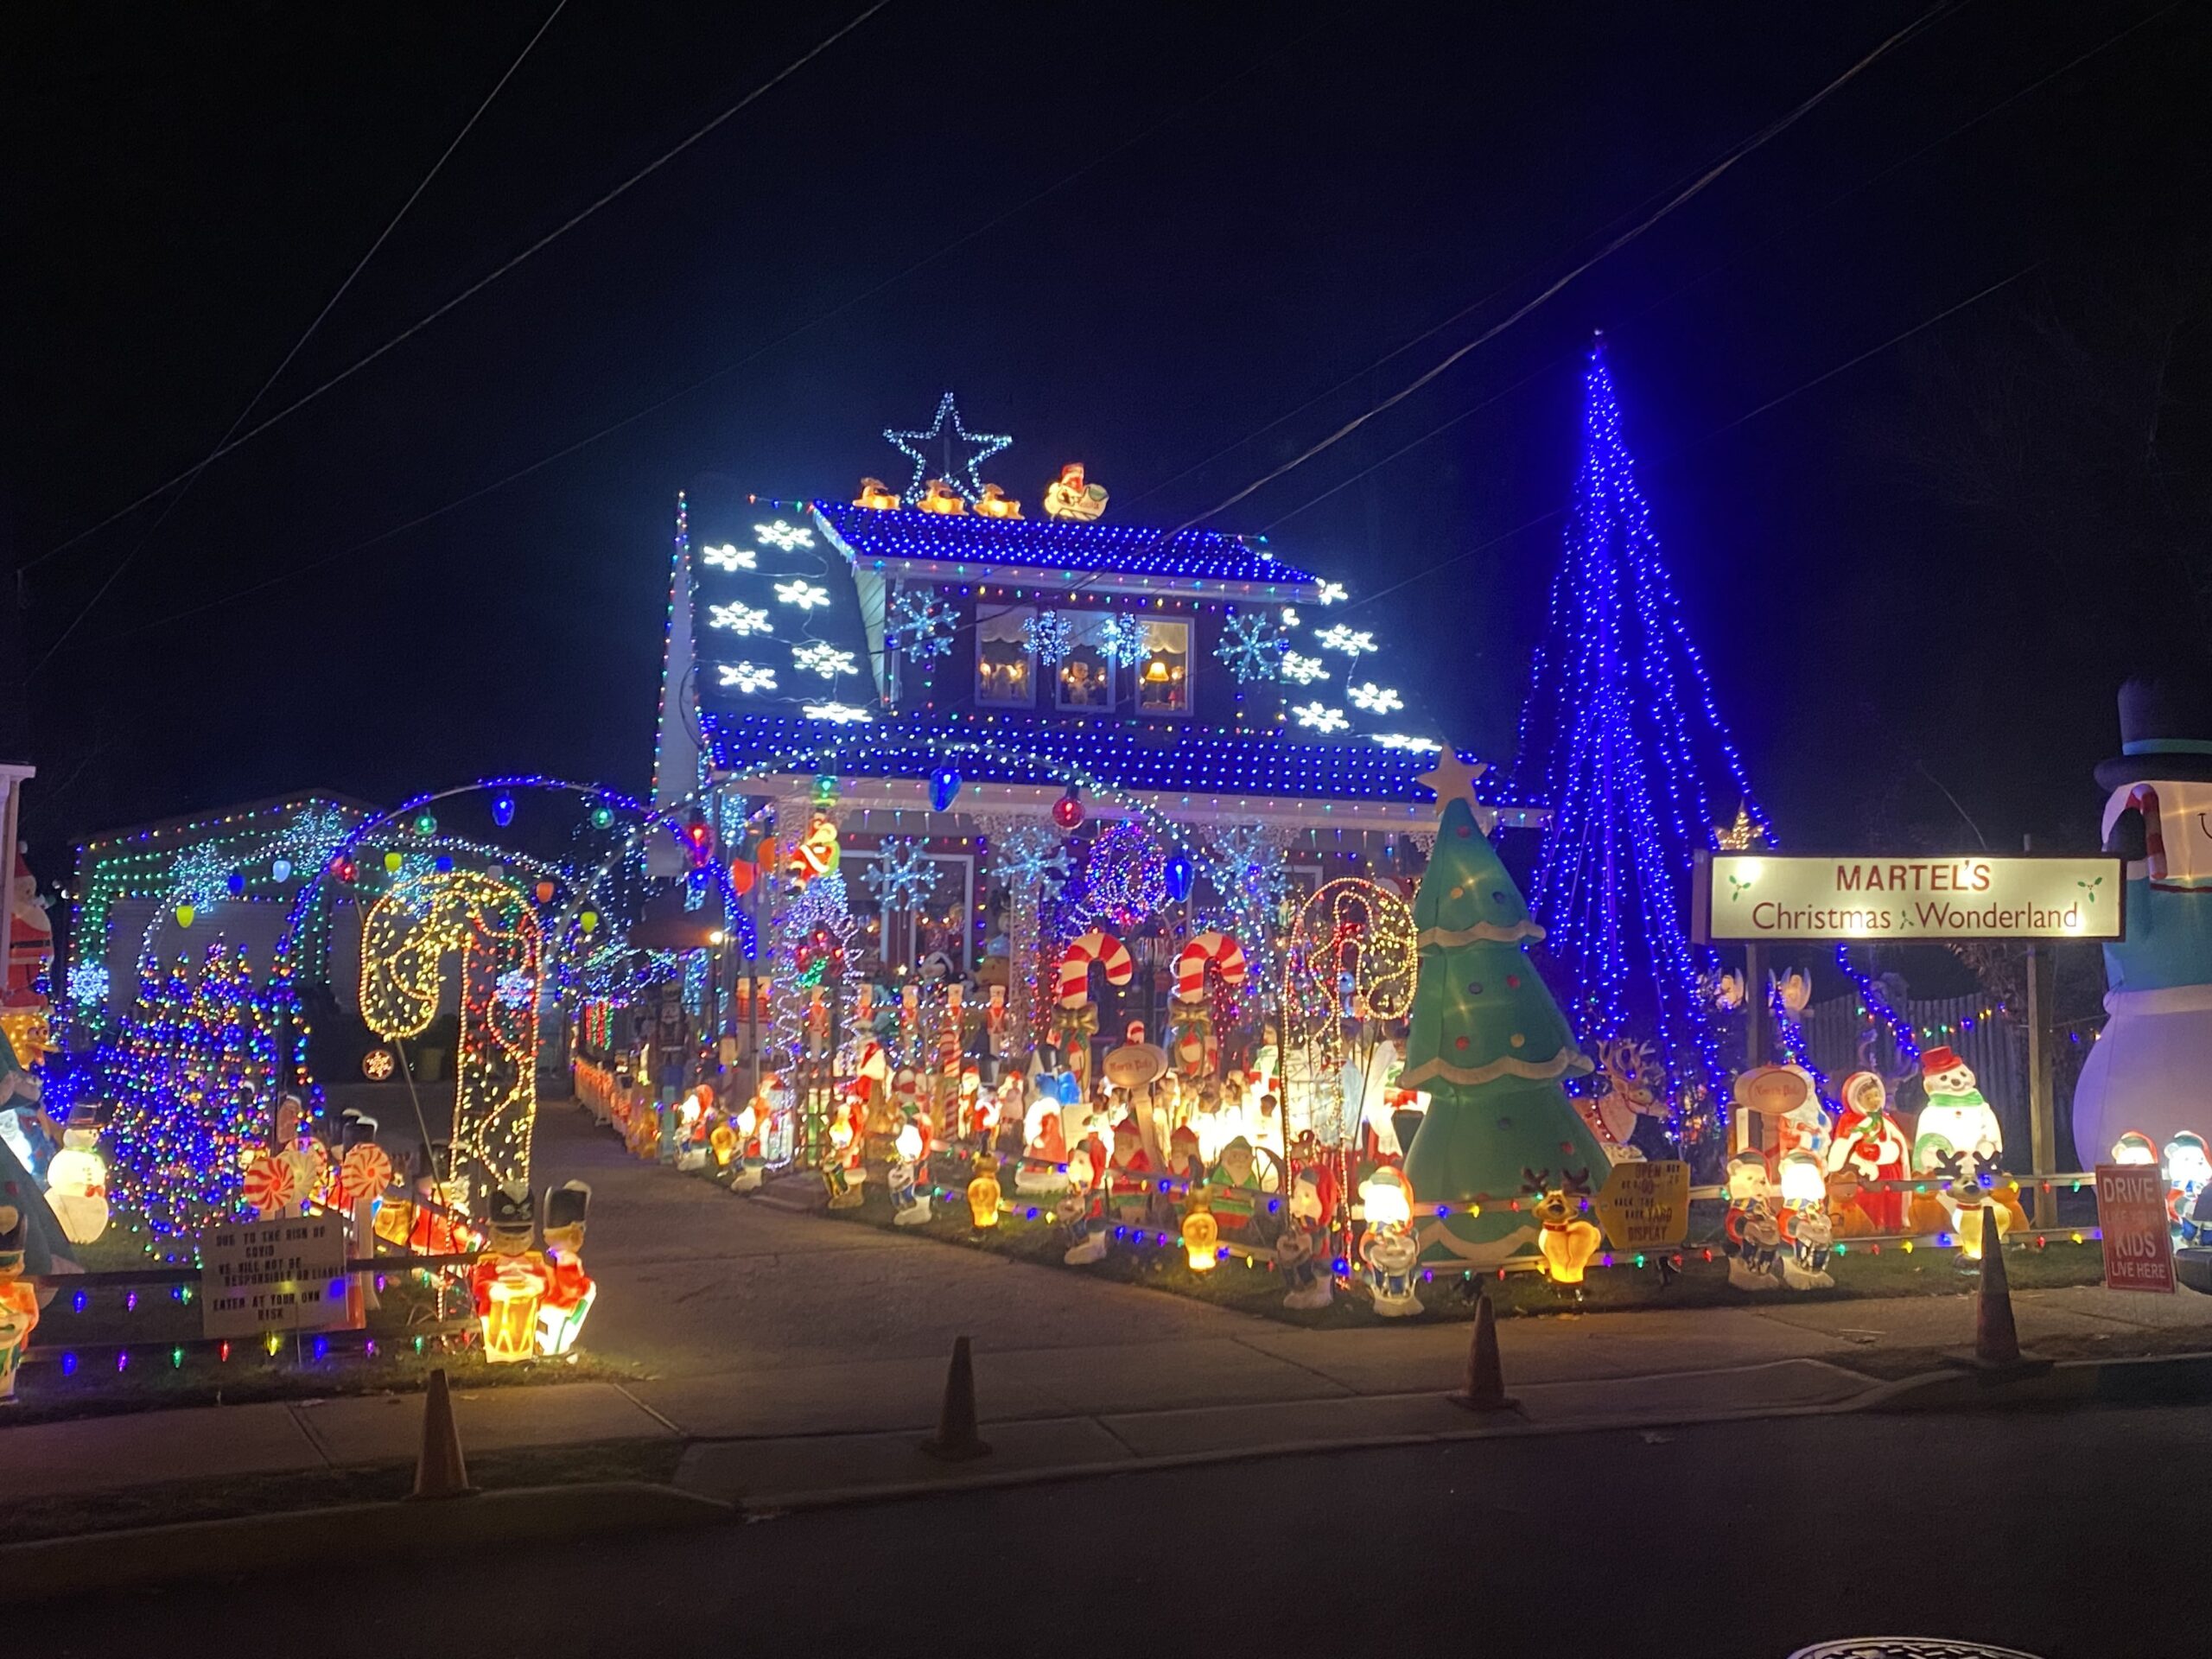 Martels Christmas Wonderland Christmas lights in Hamilton New Jersey